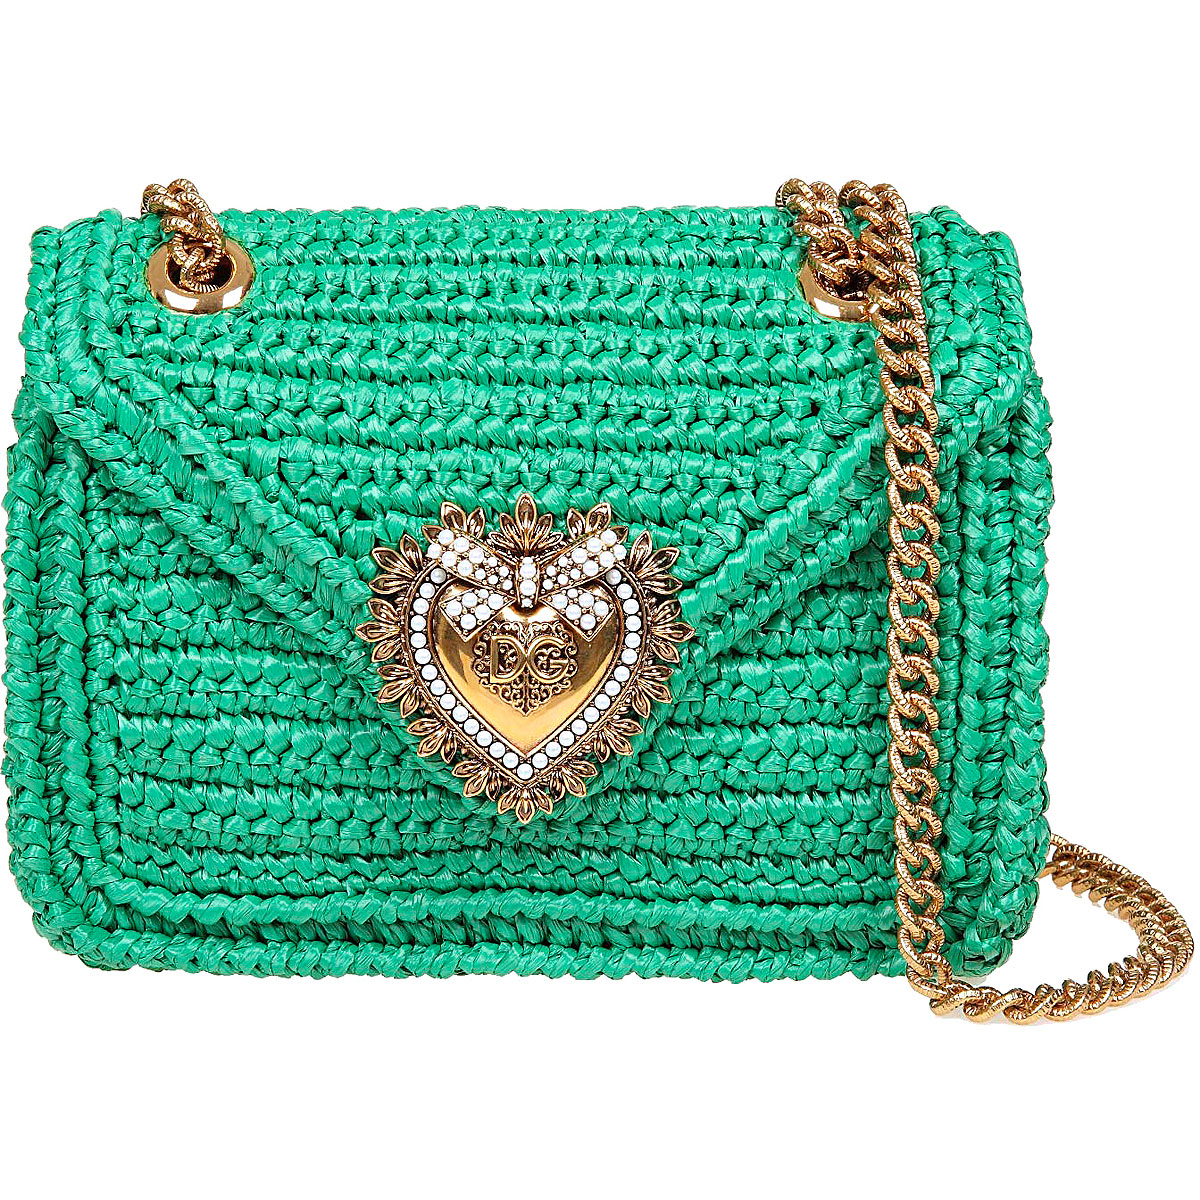 Handbags Dolce & Gabbana, Style code: bb6641-a0434-8b956